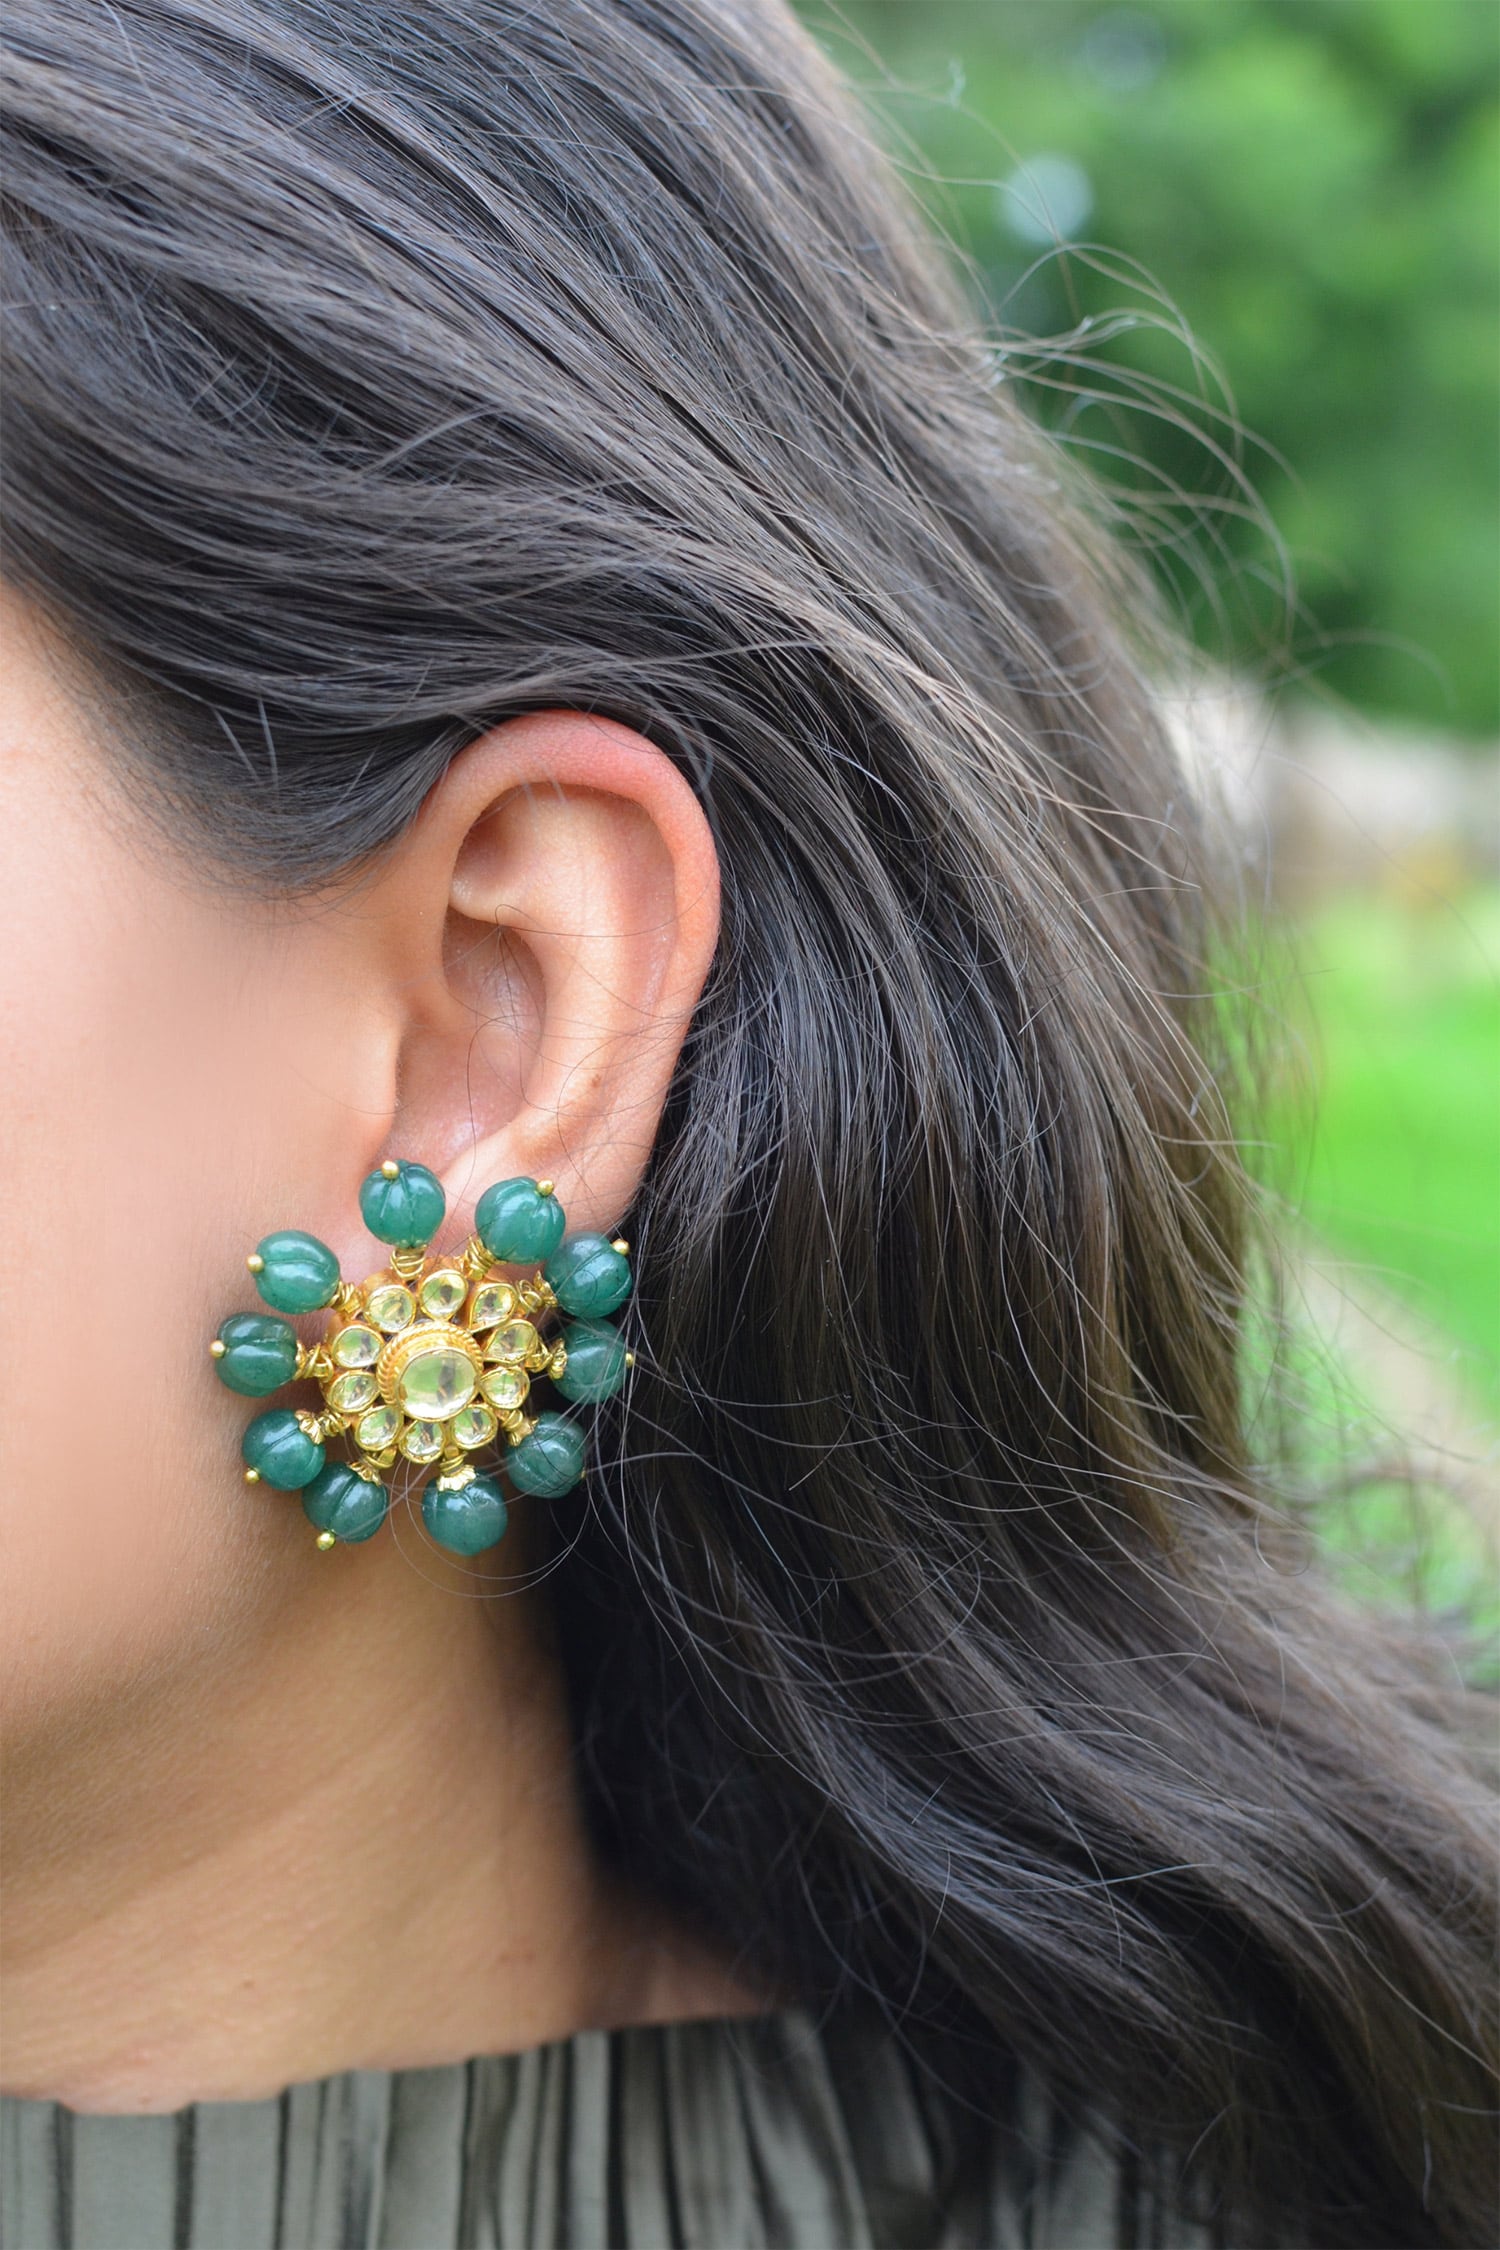 Looking for Jhumka Earrings Online Online with International Courier  Online  earrings Jhumka earrings Jhumka